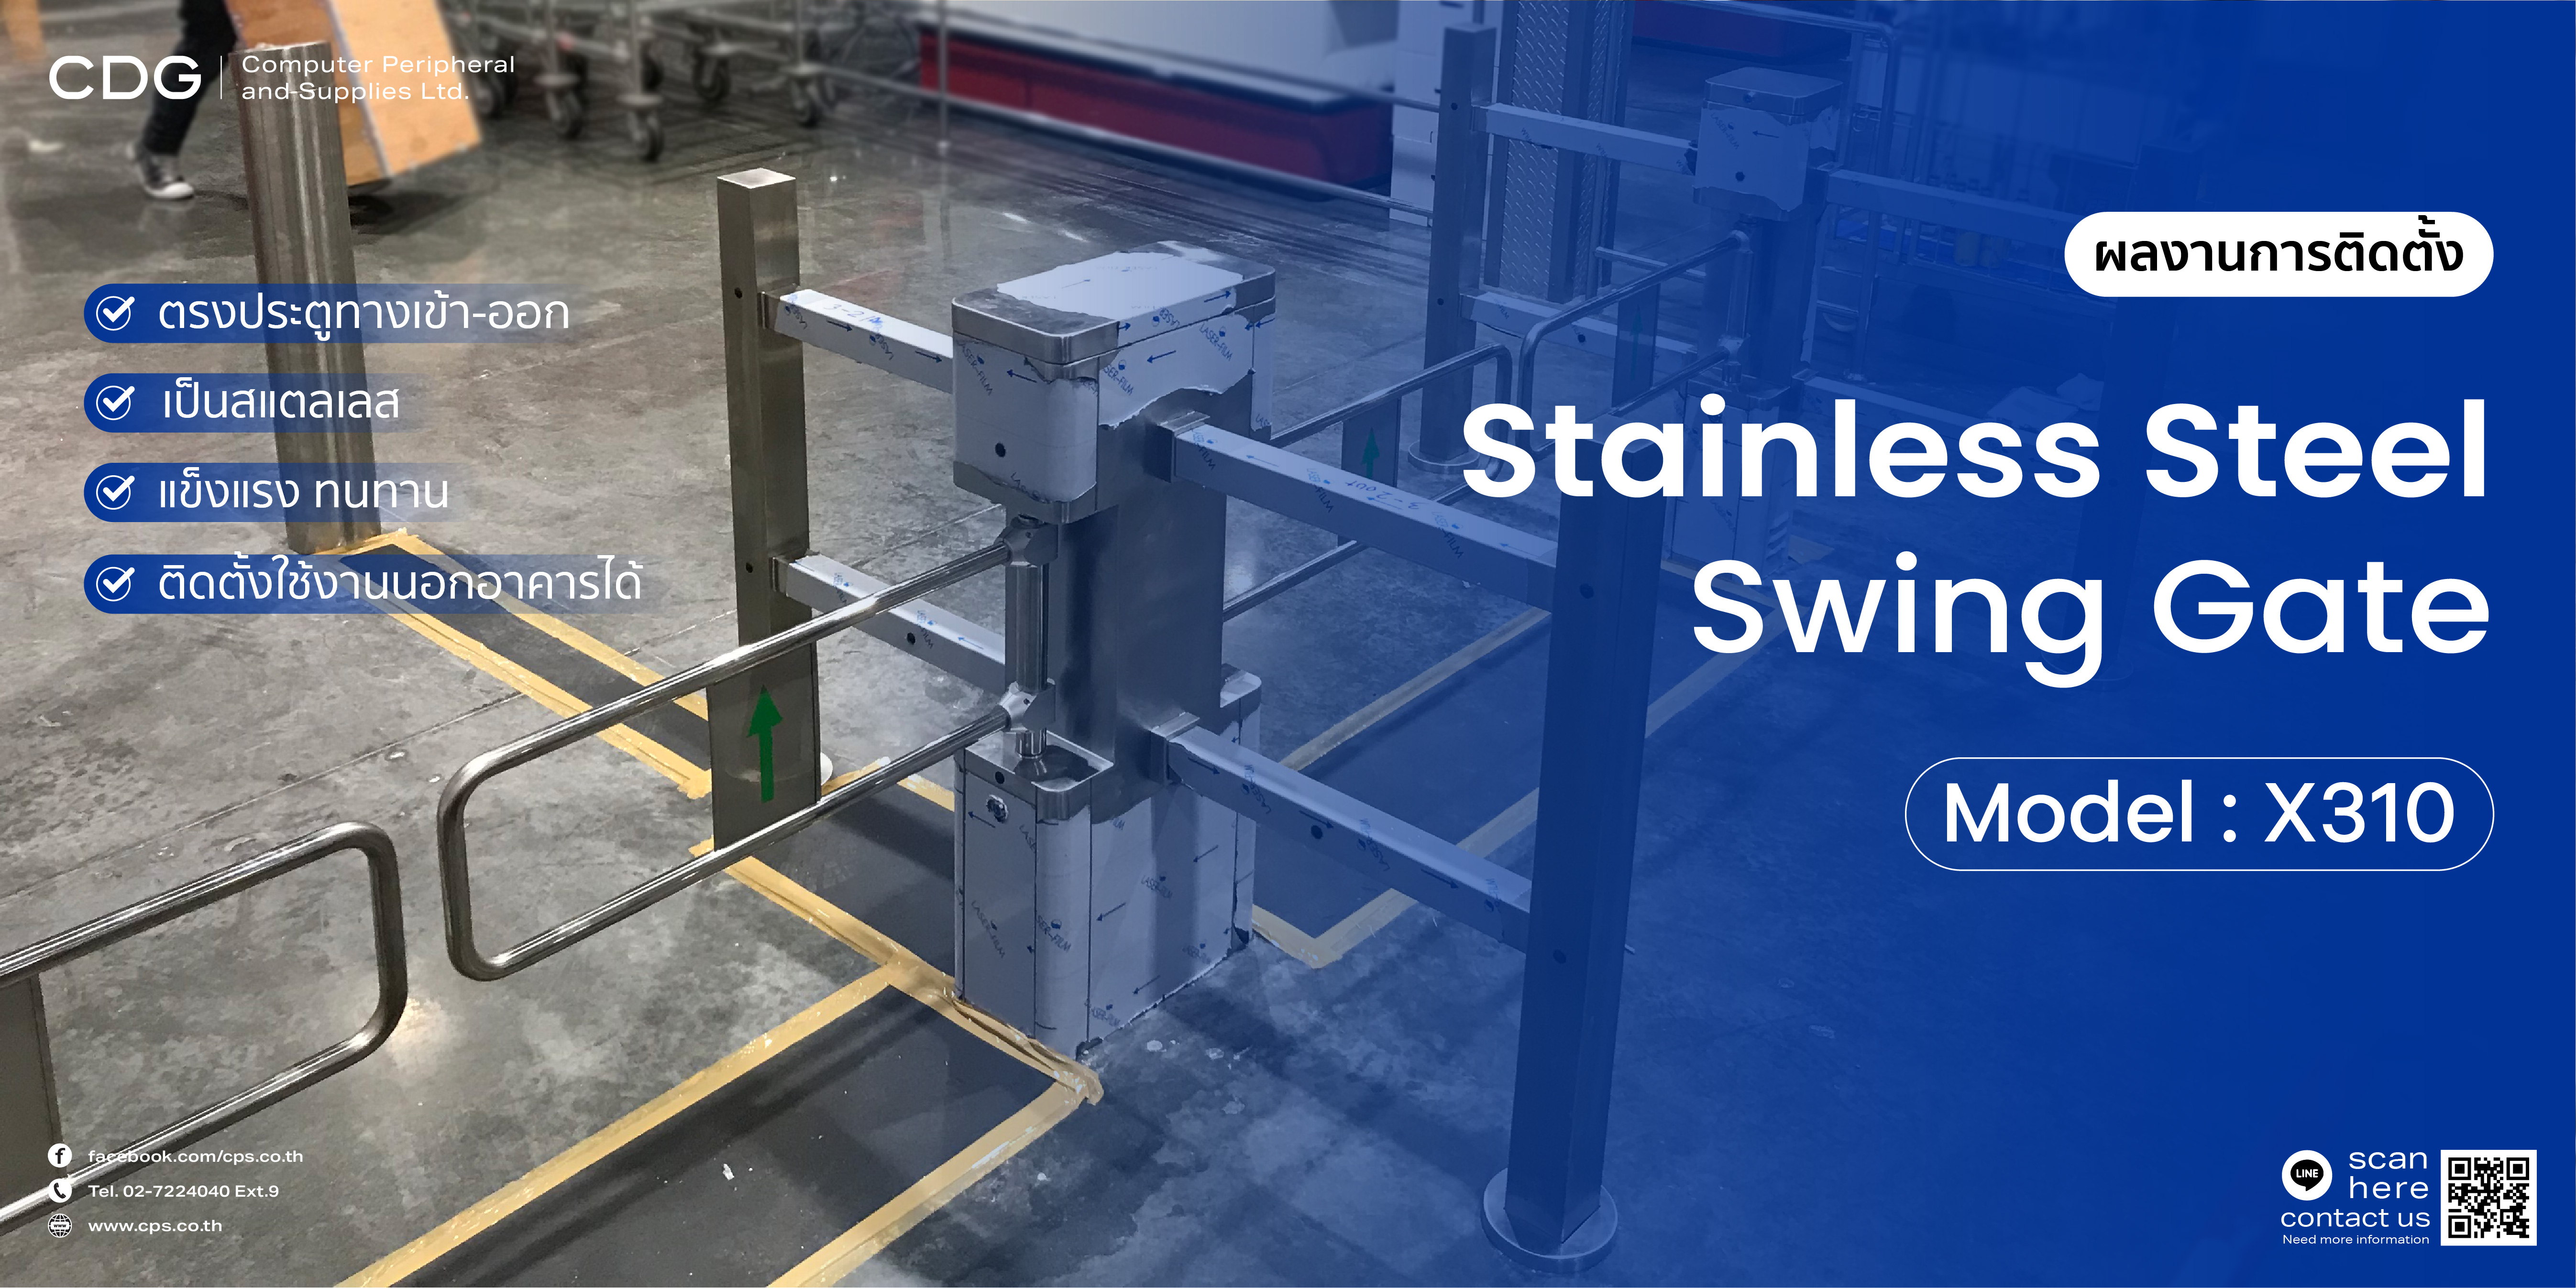 Stainless Steel Swing Gate Model X310